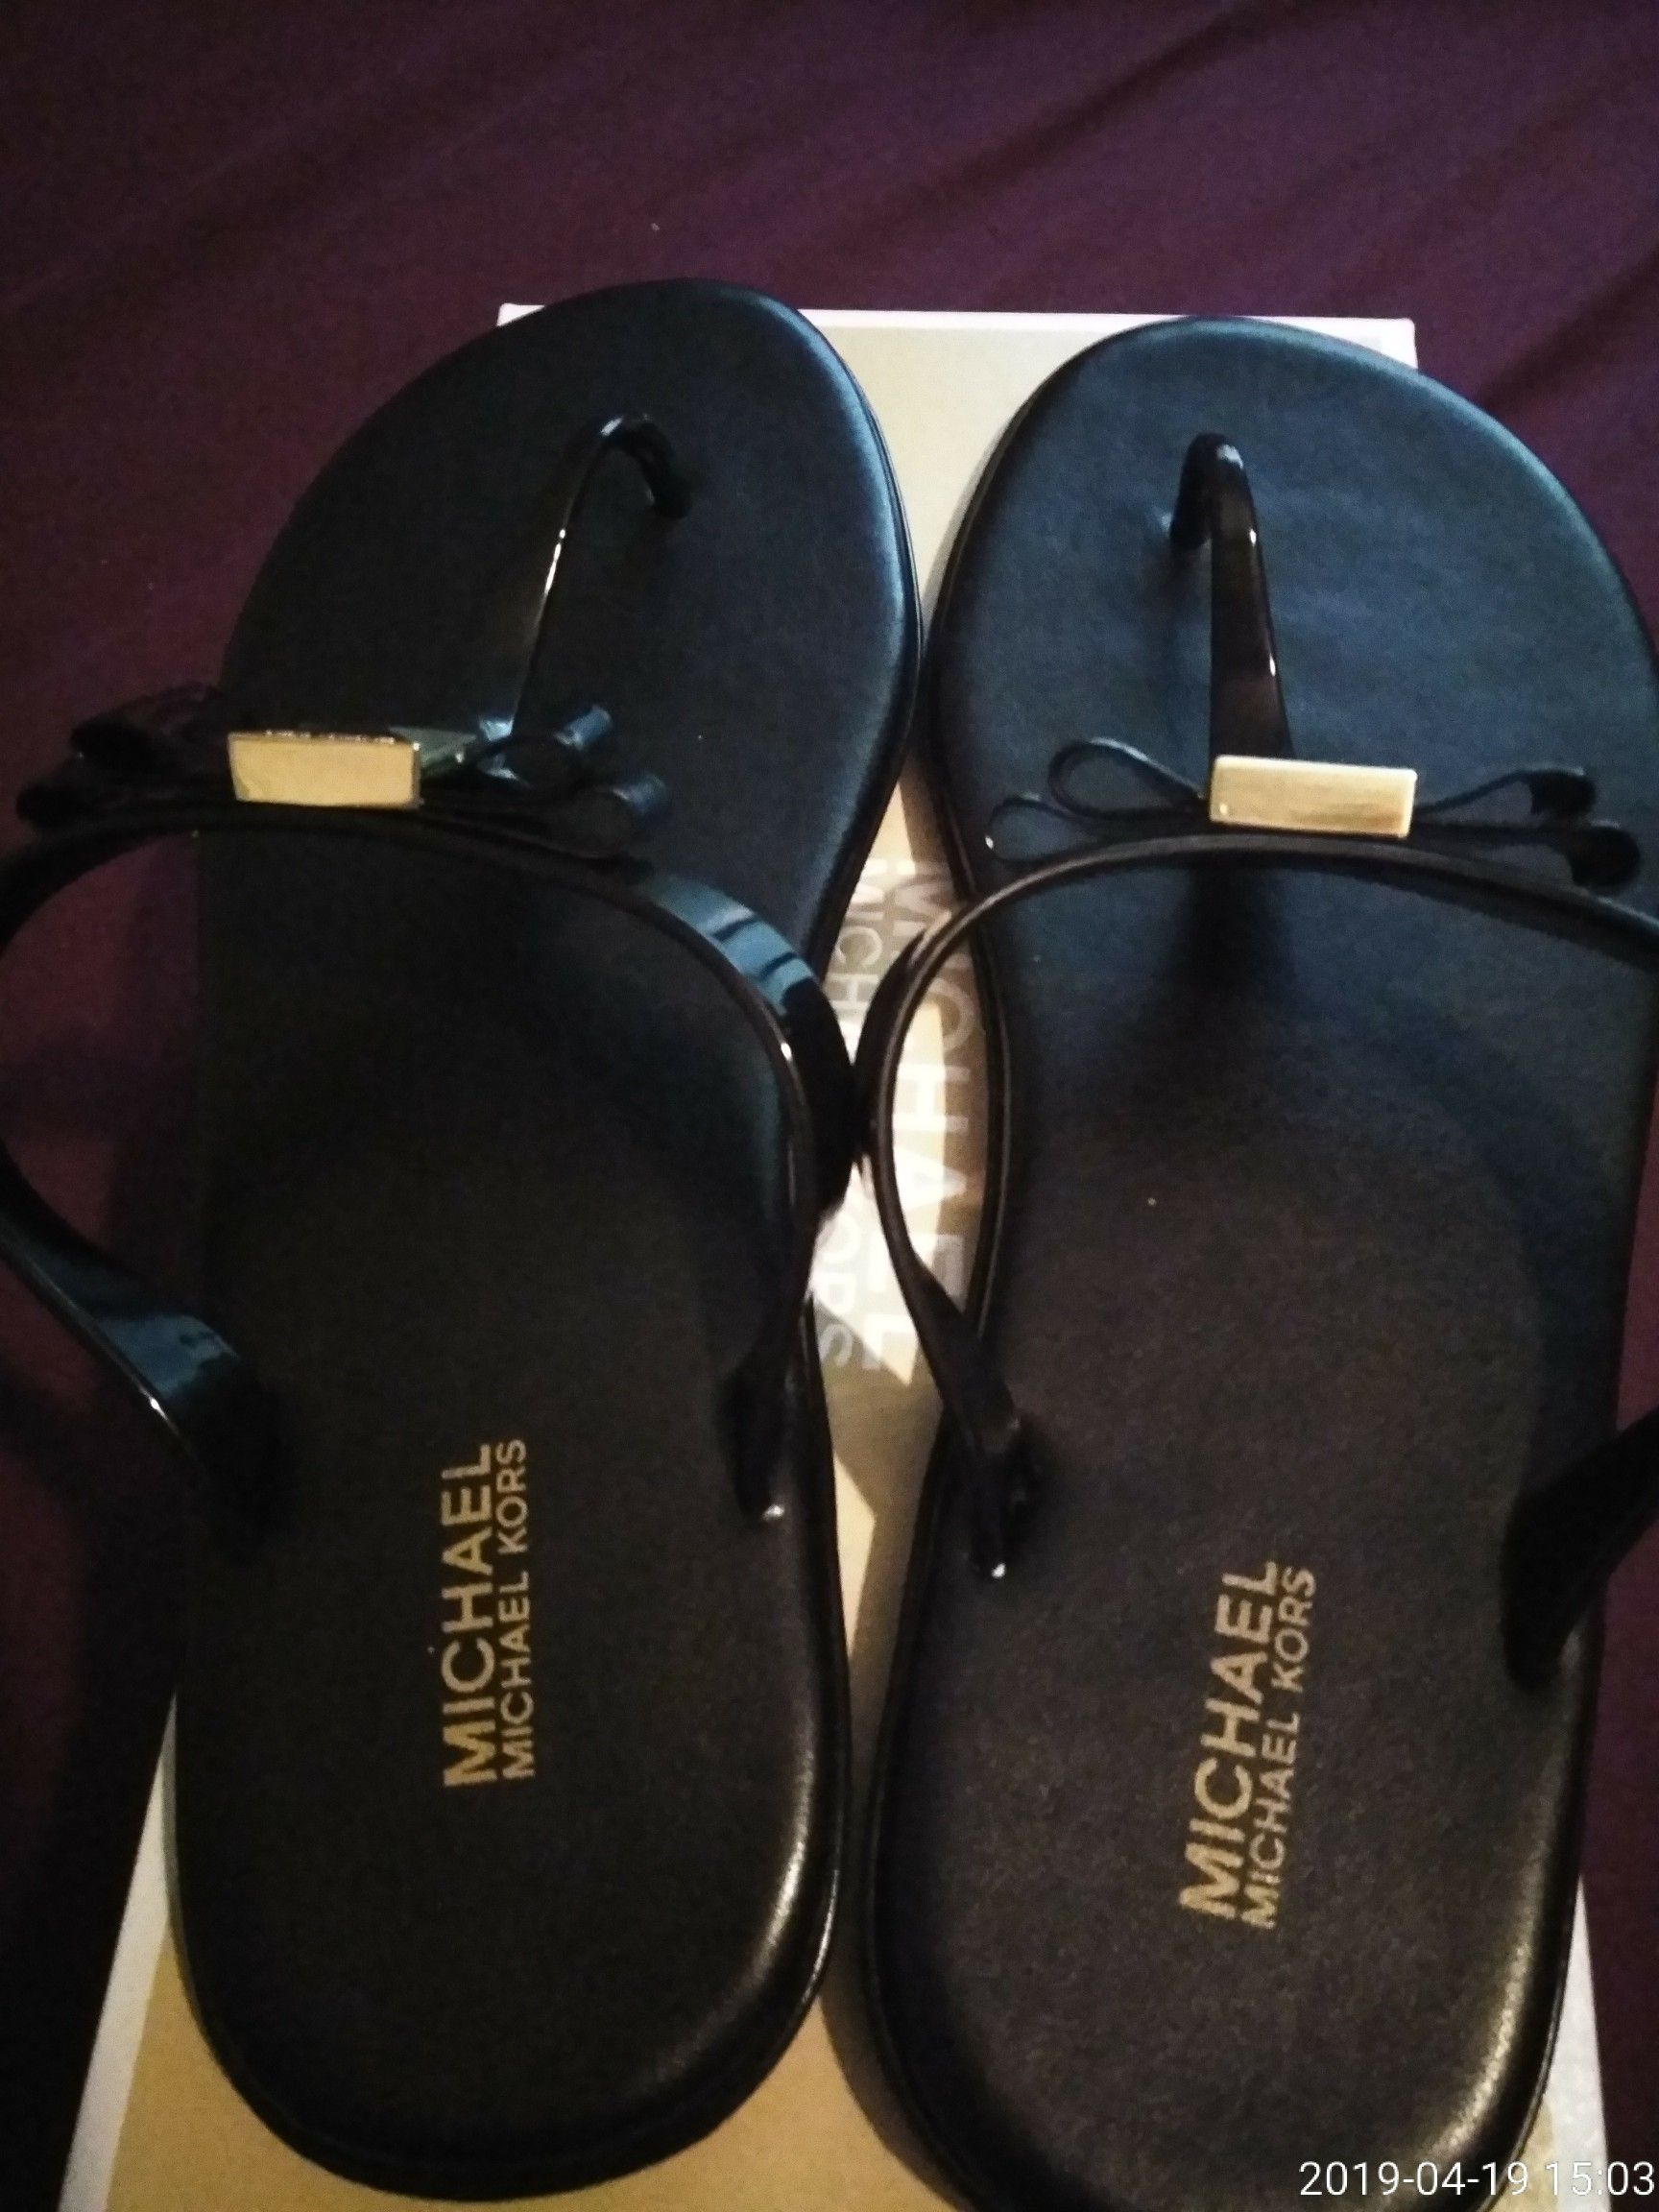 Brand new pair. Michael Kors sandals